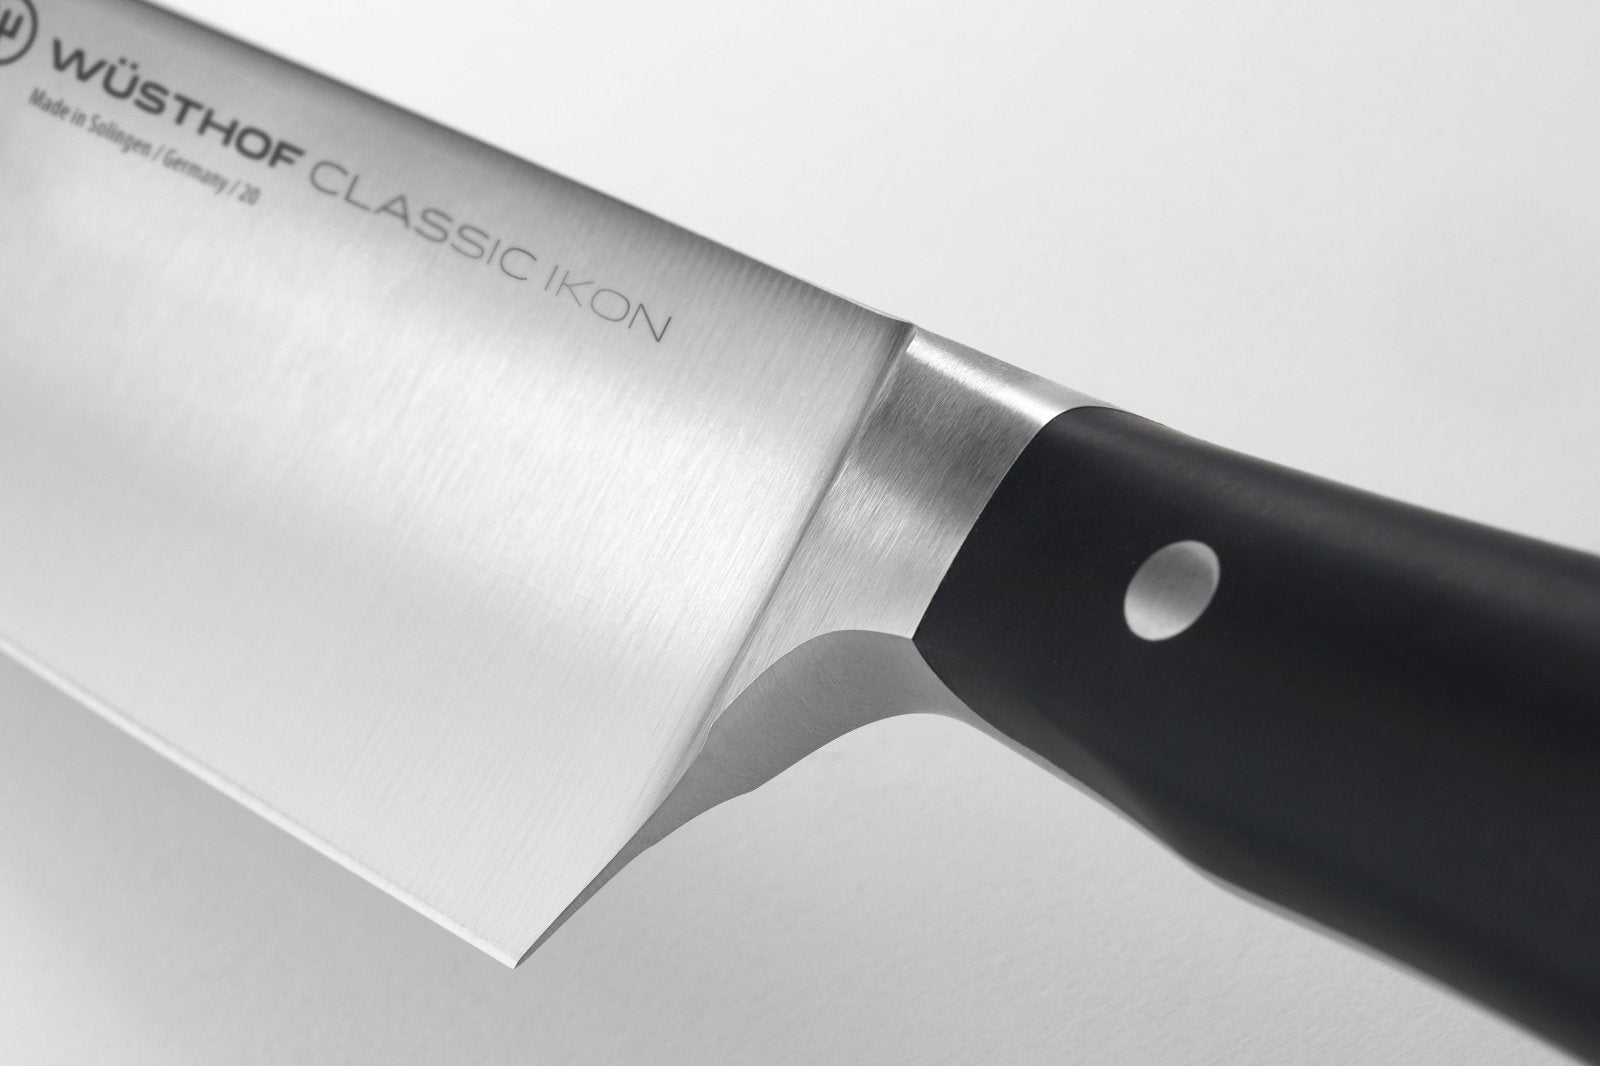 Wusthof Classic IKON Knife Set 2 Piece - WT1120360205 - The Cotswold Knife Company